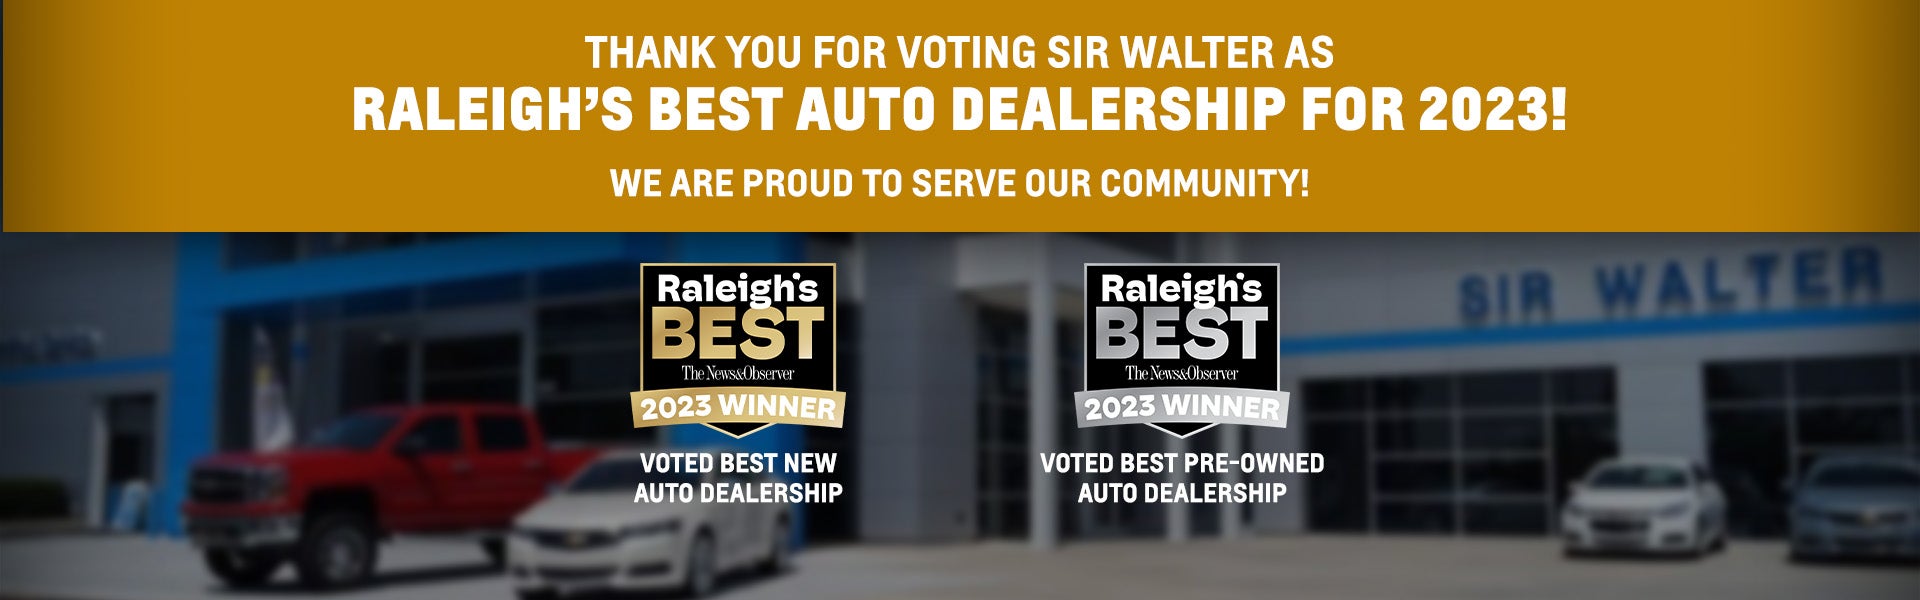 Sir Walter Chevrolet - Raleigh's Best Auto Dealership 2023